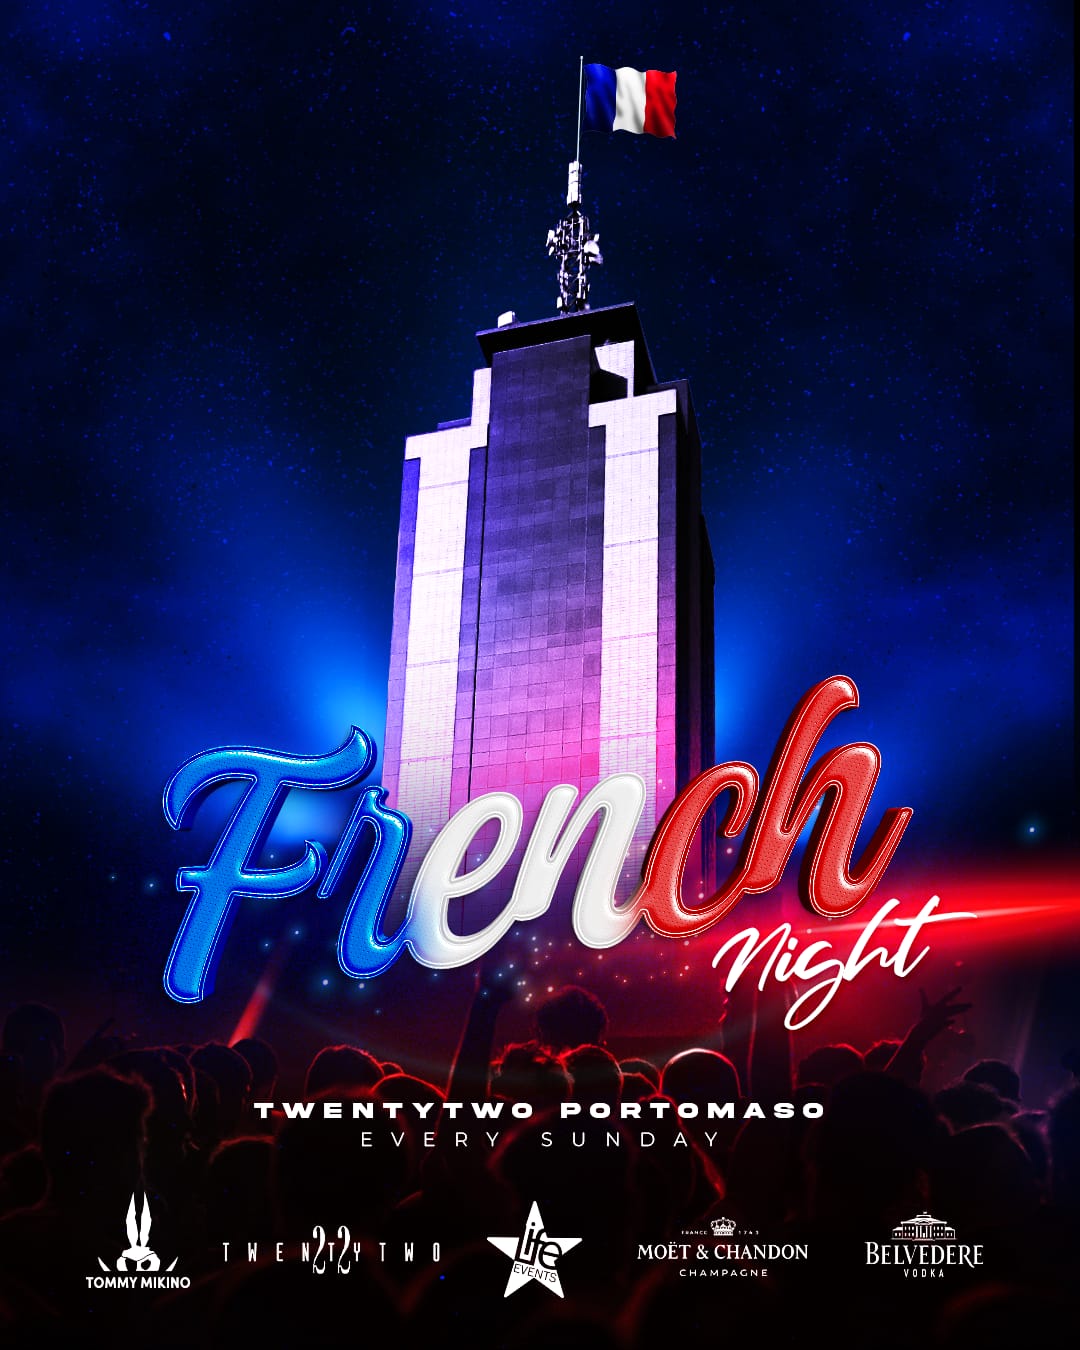 TwentyTwo French Night